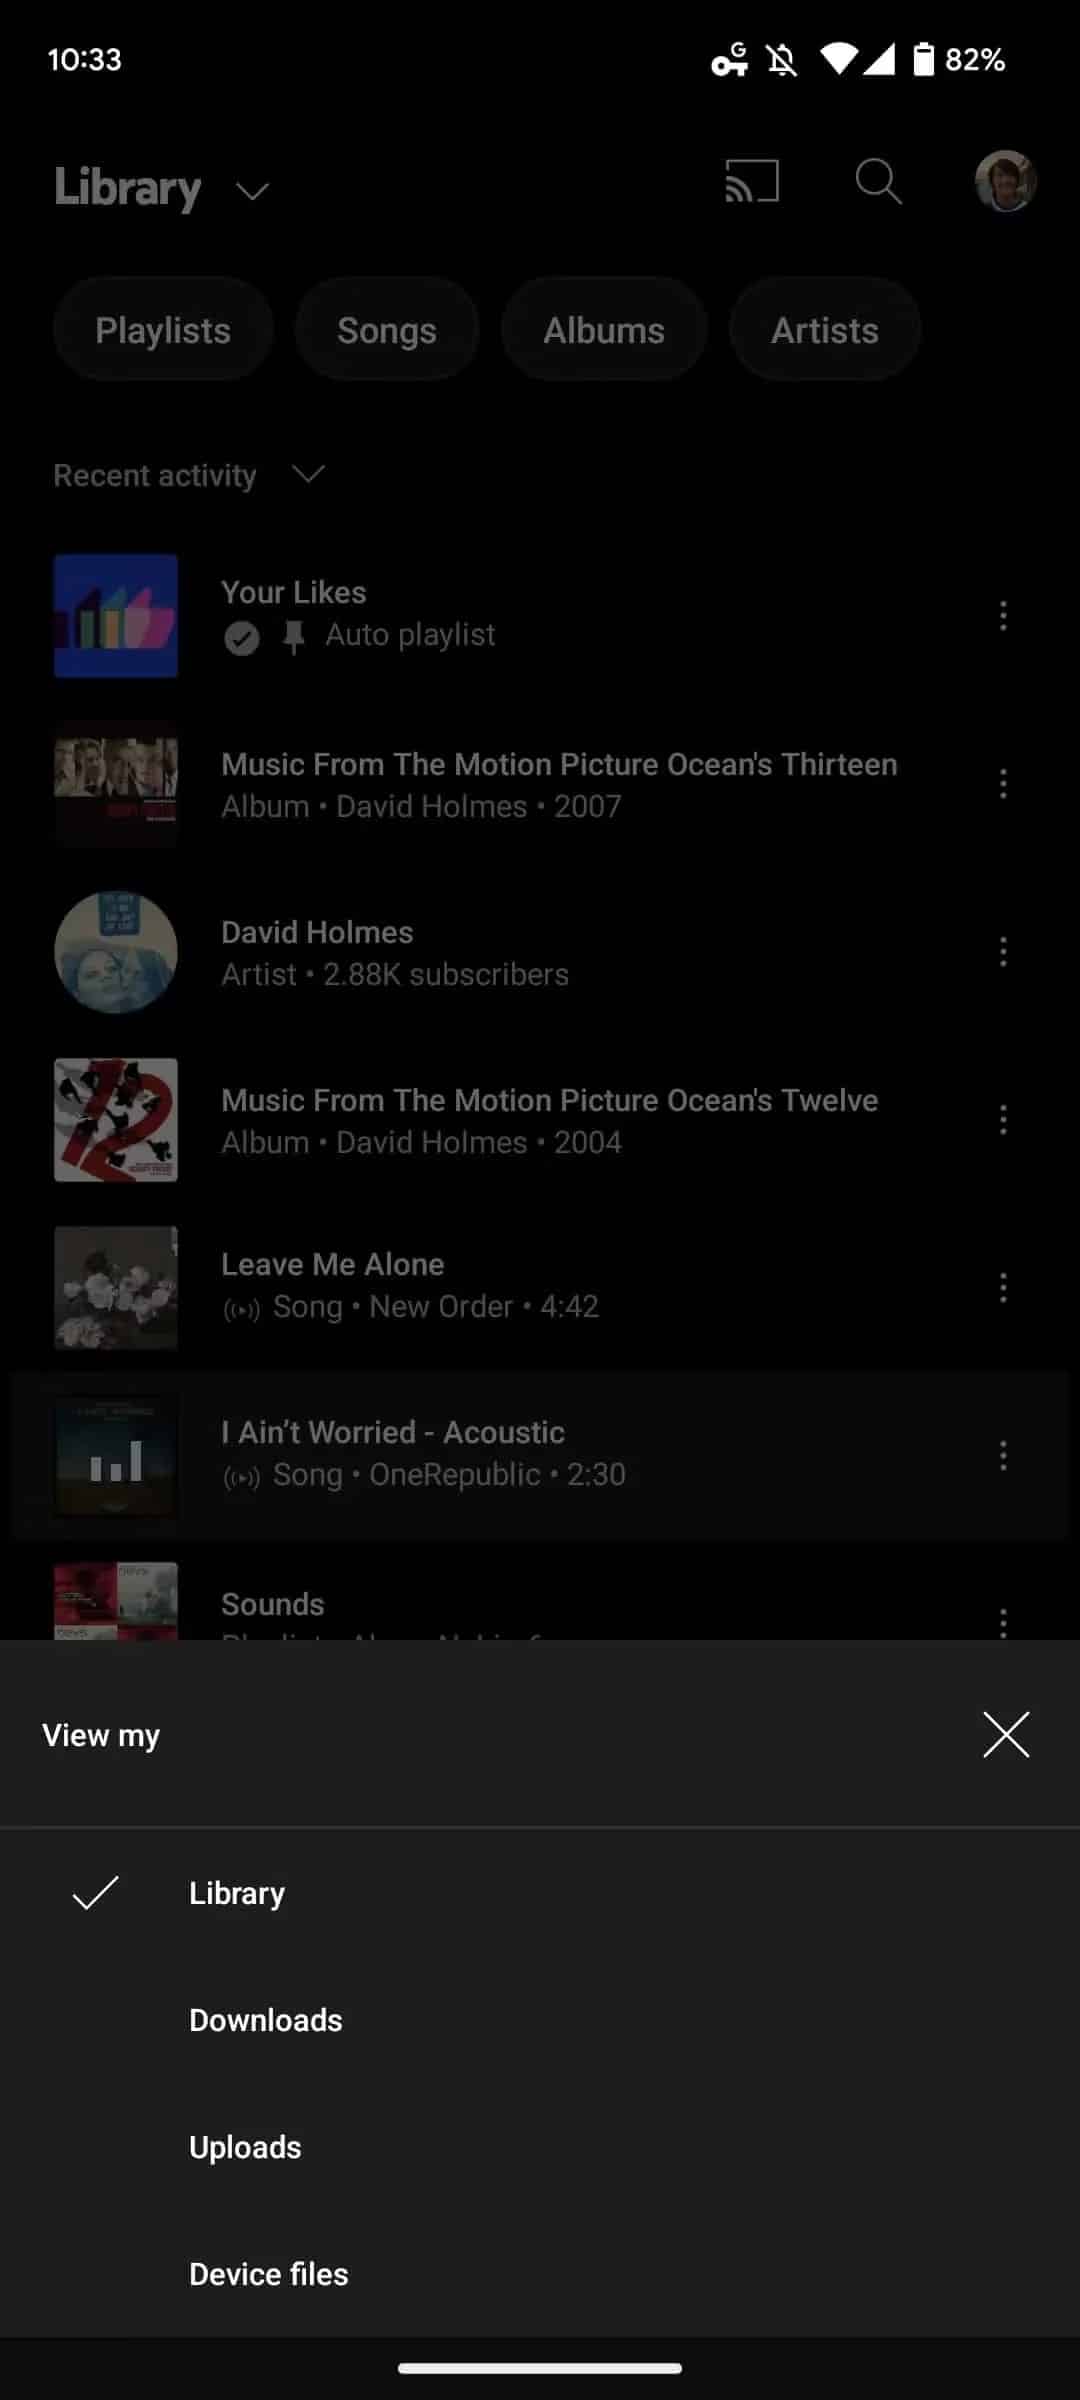 youtube music, YouTube Music: Η ανανεωμένη UI του Library διαθέσιμη για όλους